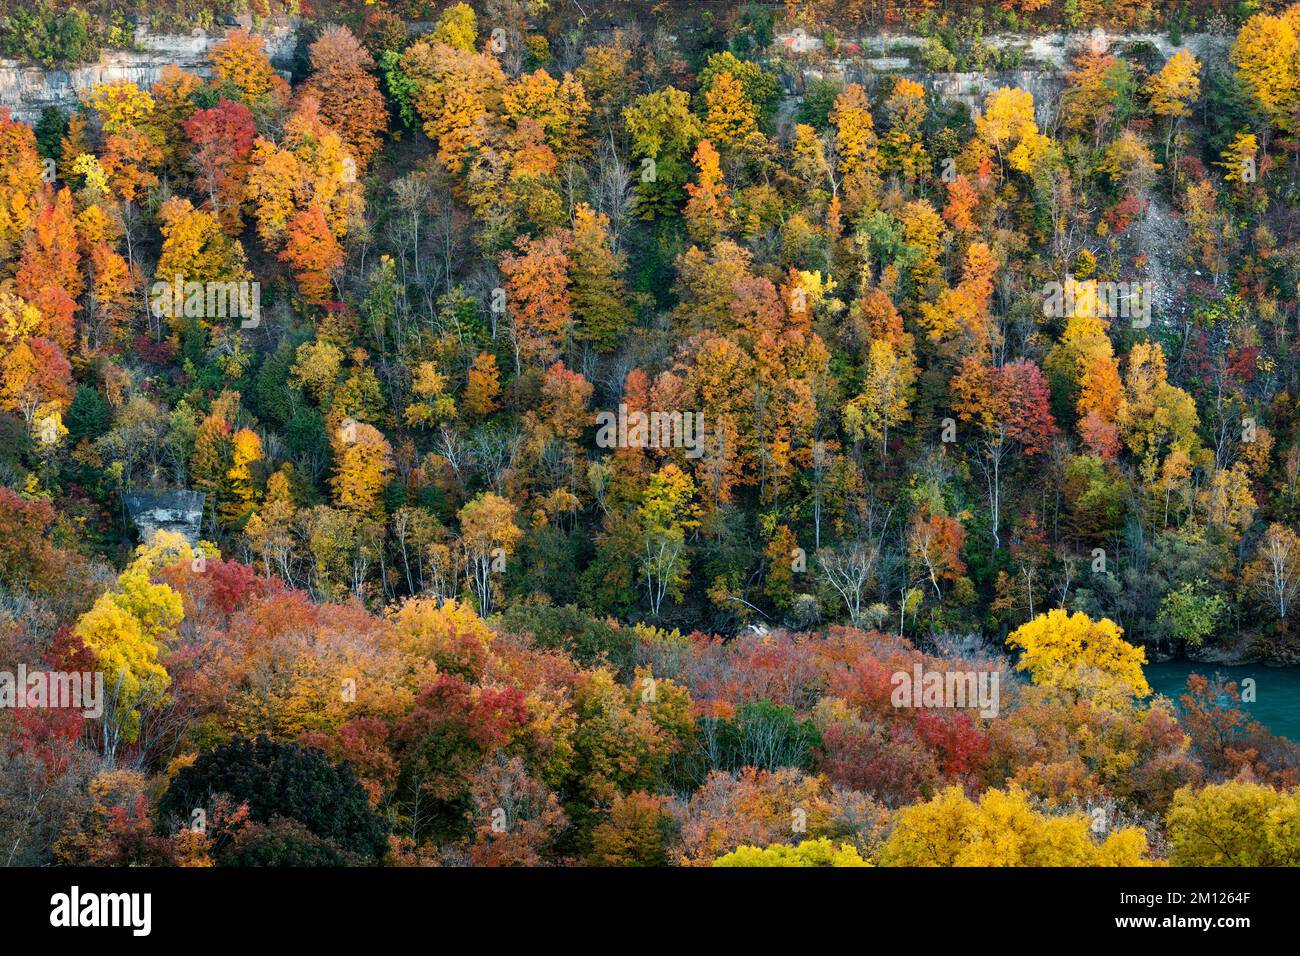 Canada, Ontario, Niagara Falls, la gorge du Niagara en automne avec toutes les couleurs de l'automne Banque D'Images